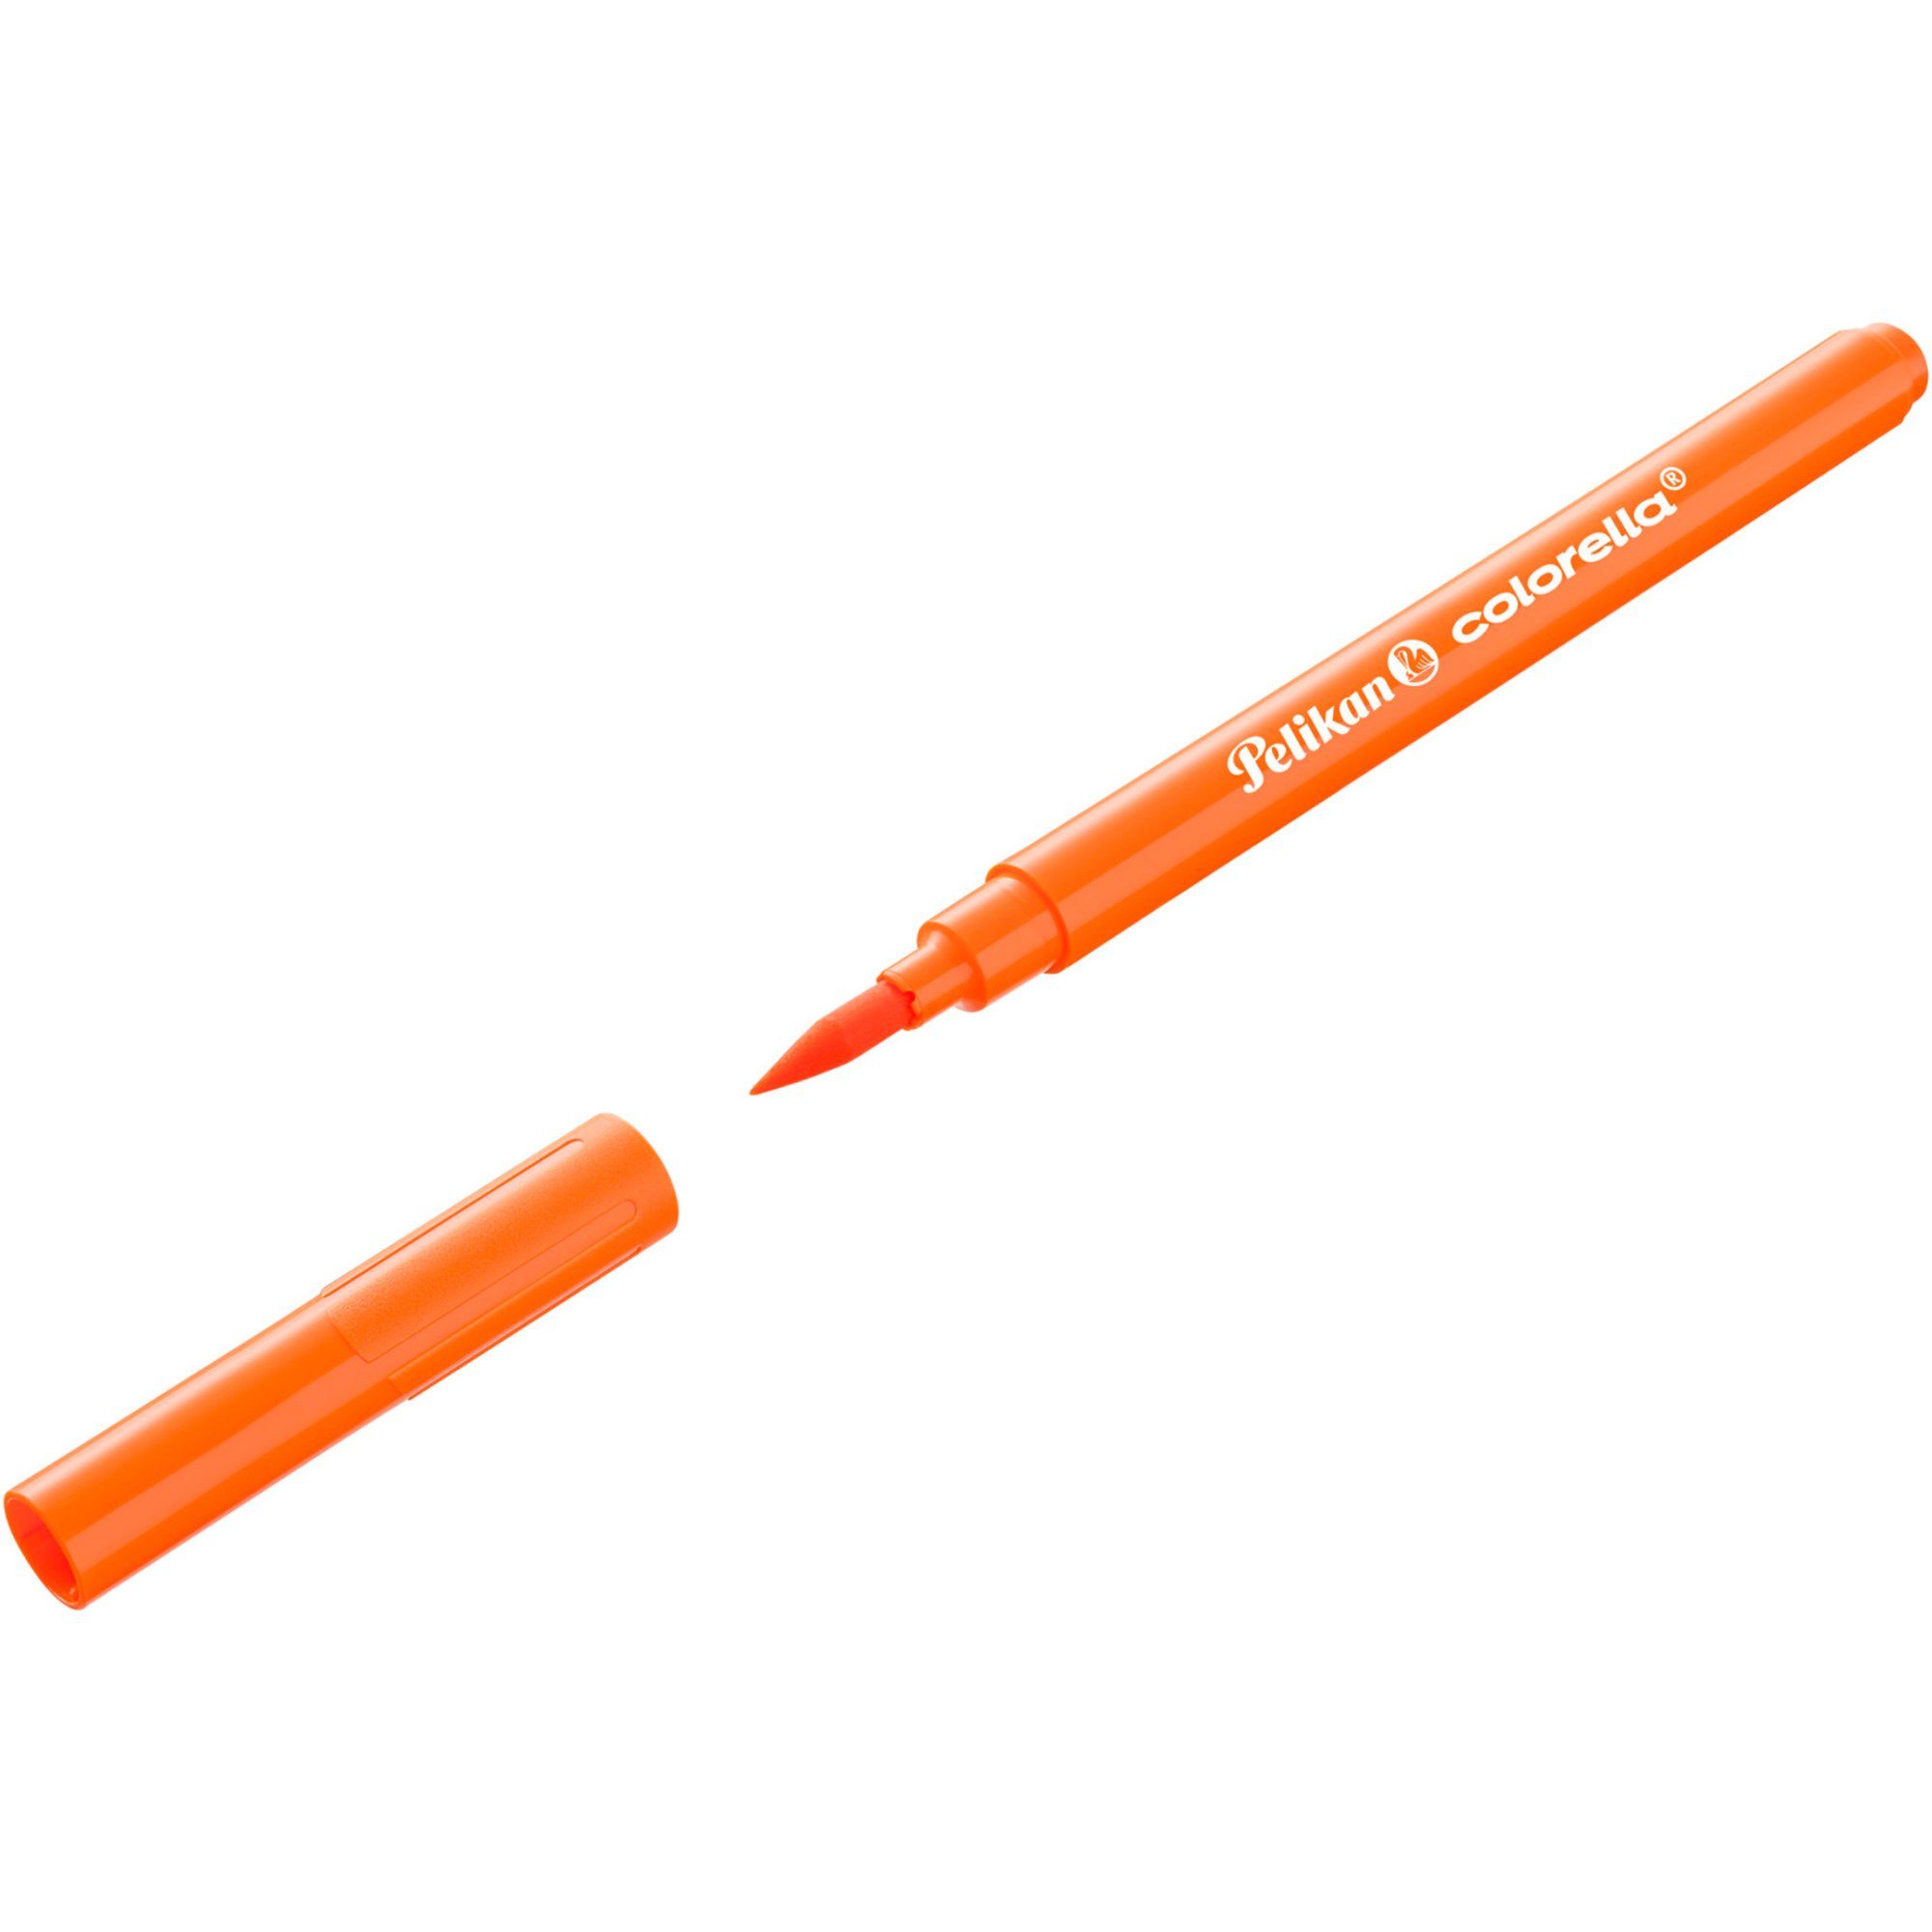 Colorella Pinselstifte, Pelikan Pelikan Druckkugelschreiber Stift